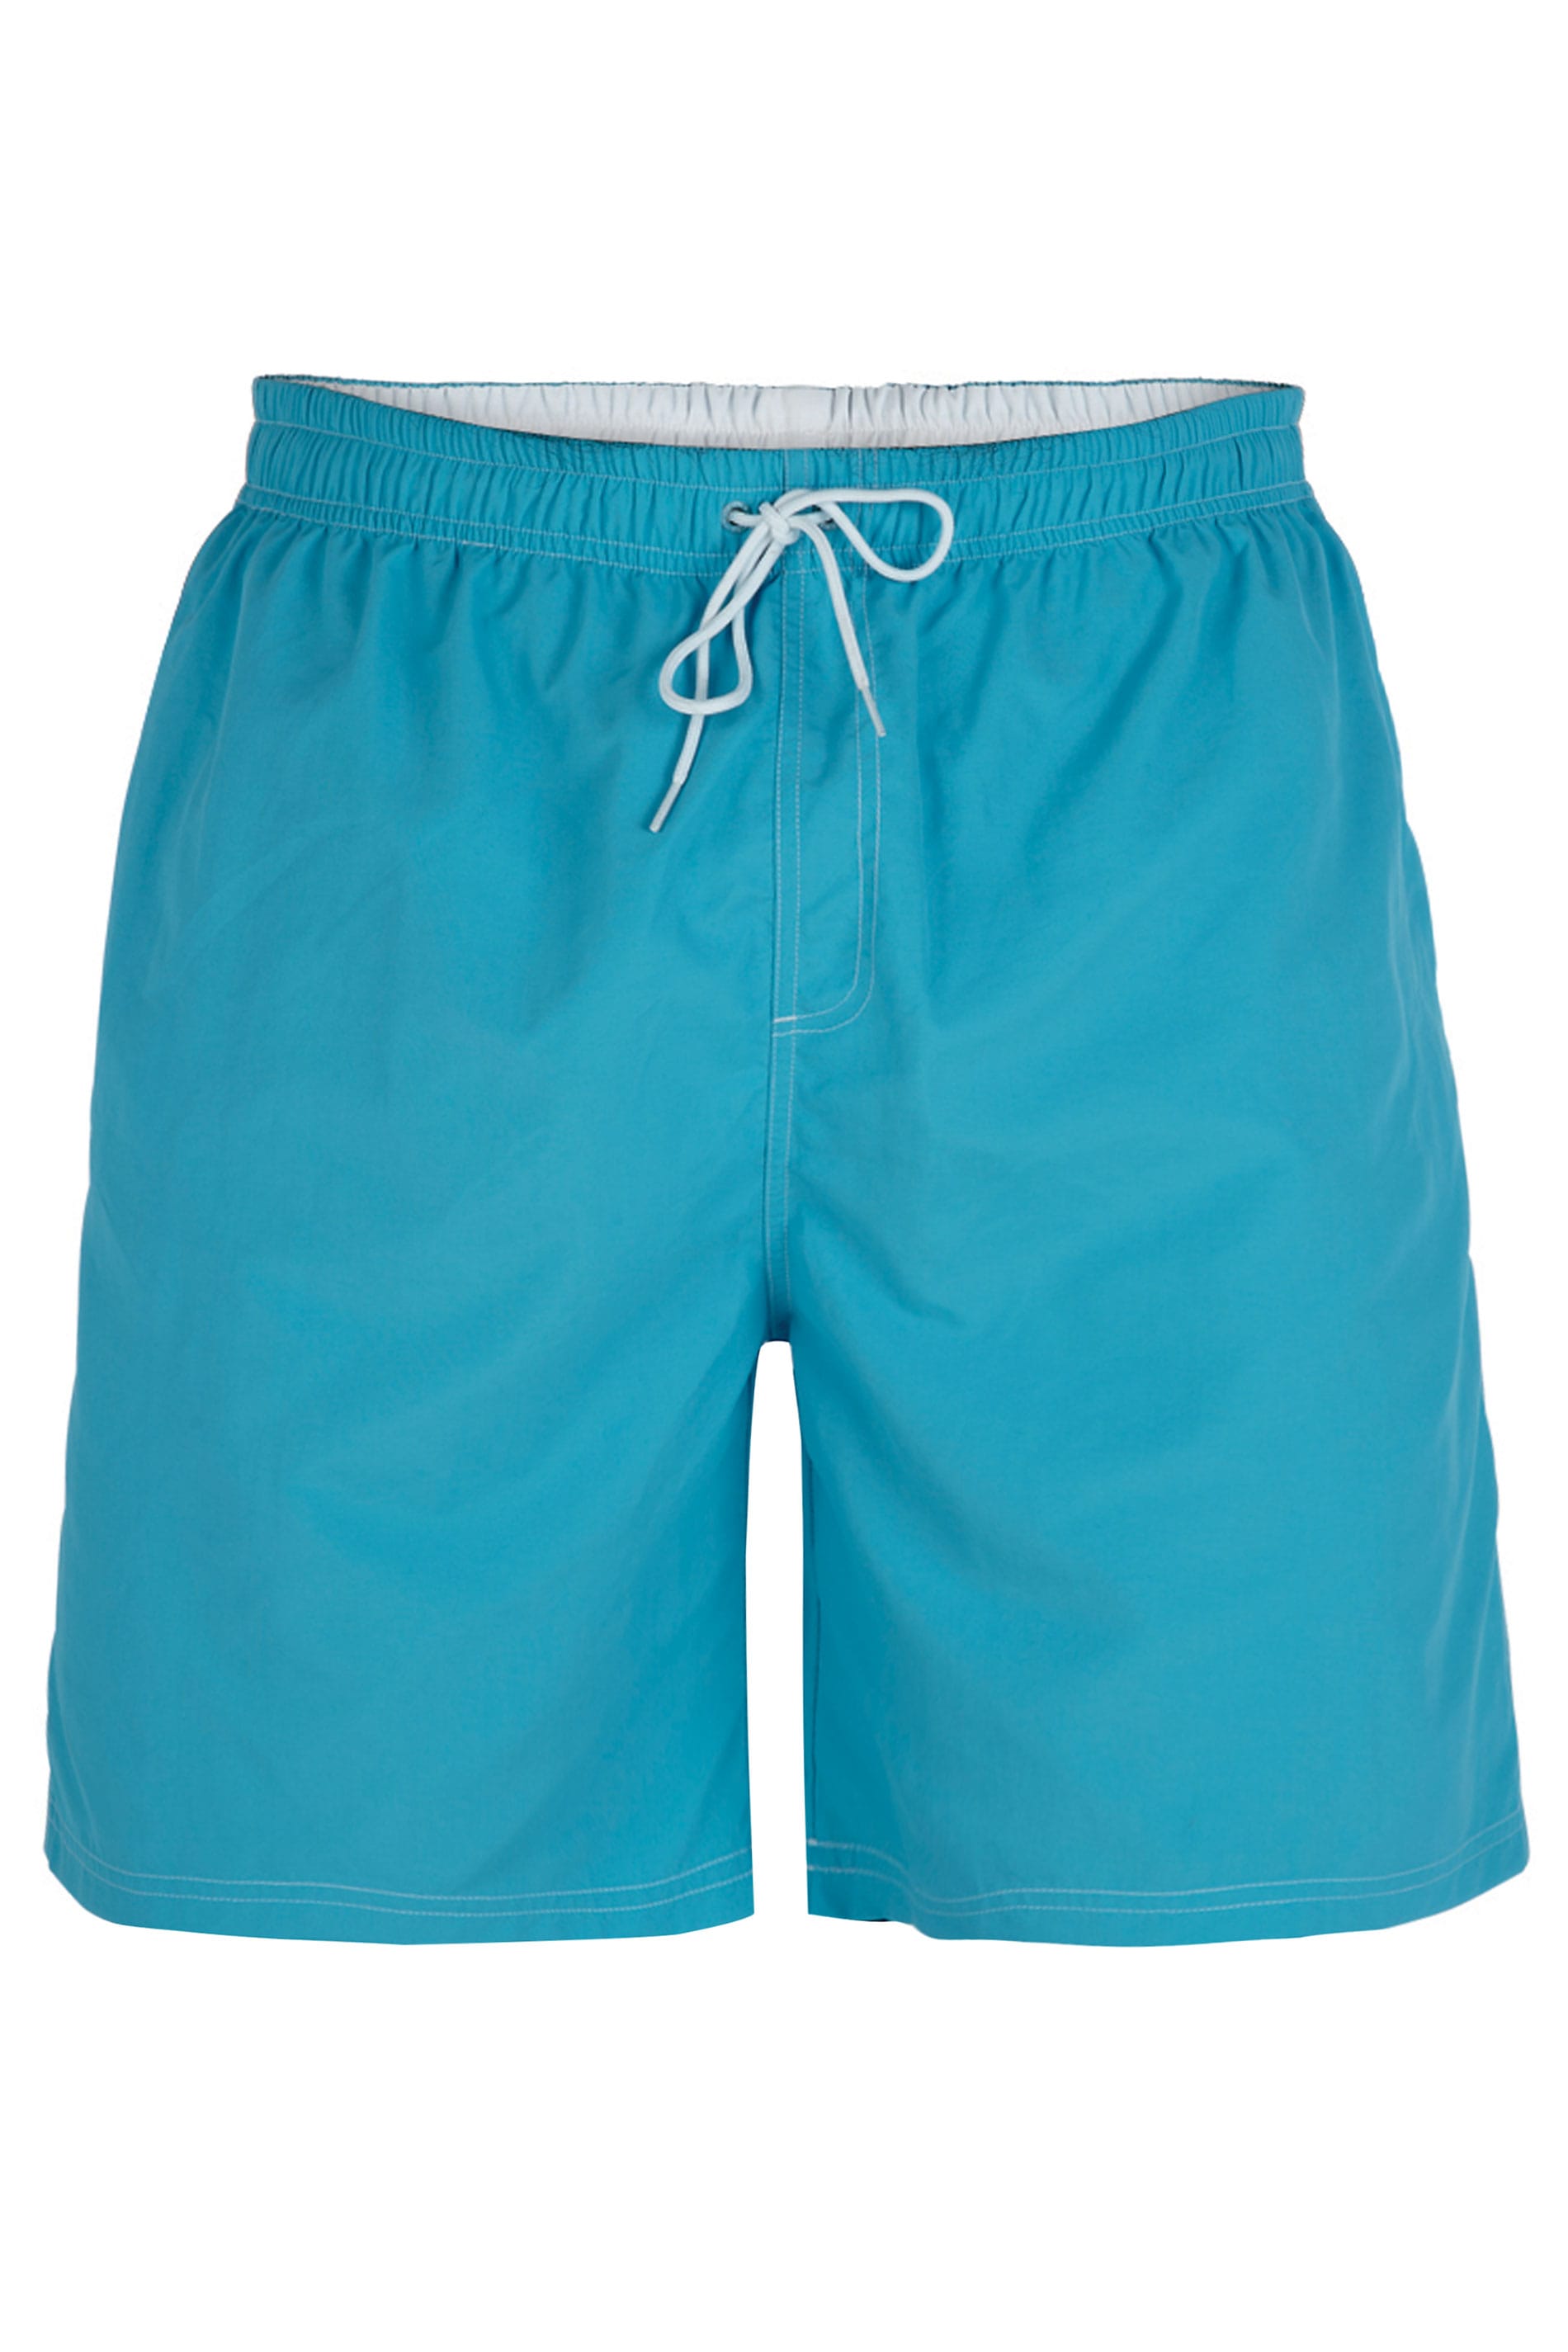 D555 Aqua Blue Swim Shorts | BadRhino